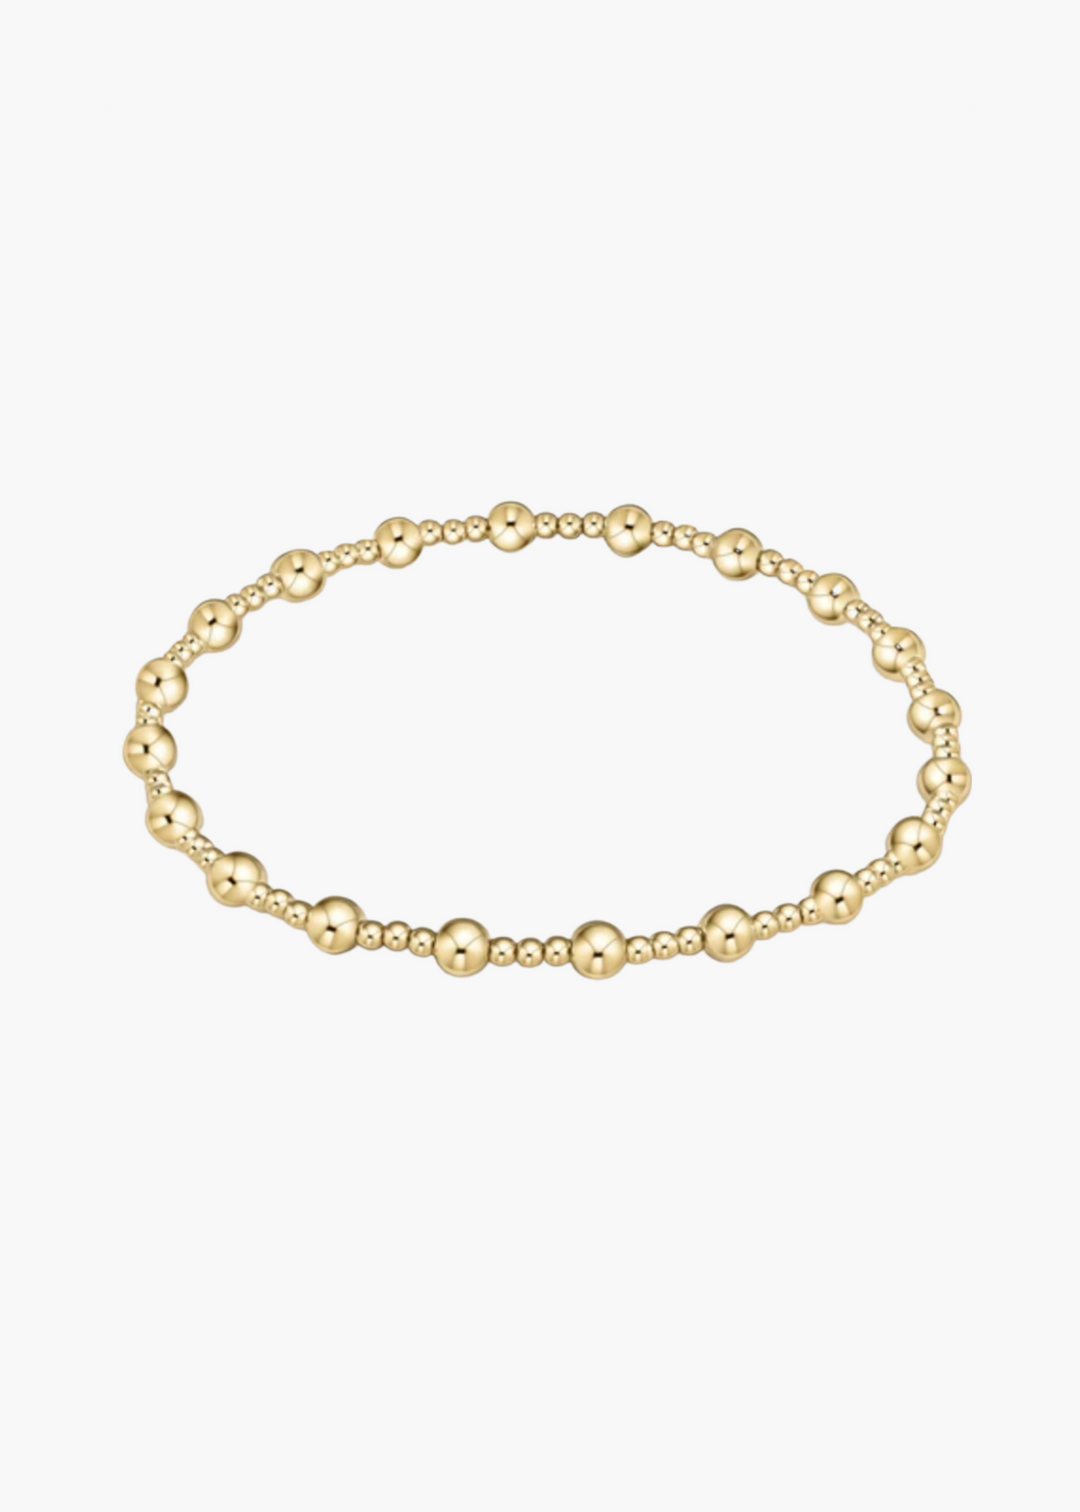 Classic Sincerity Pattern 4mm Bead Bracelet - Gold